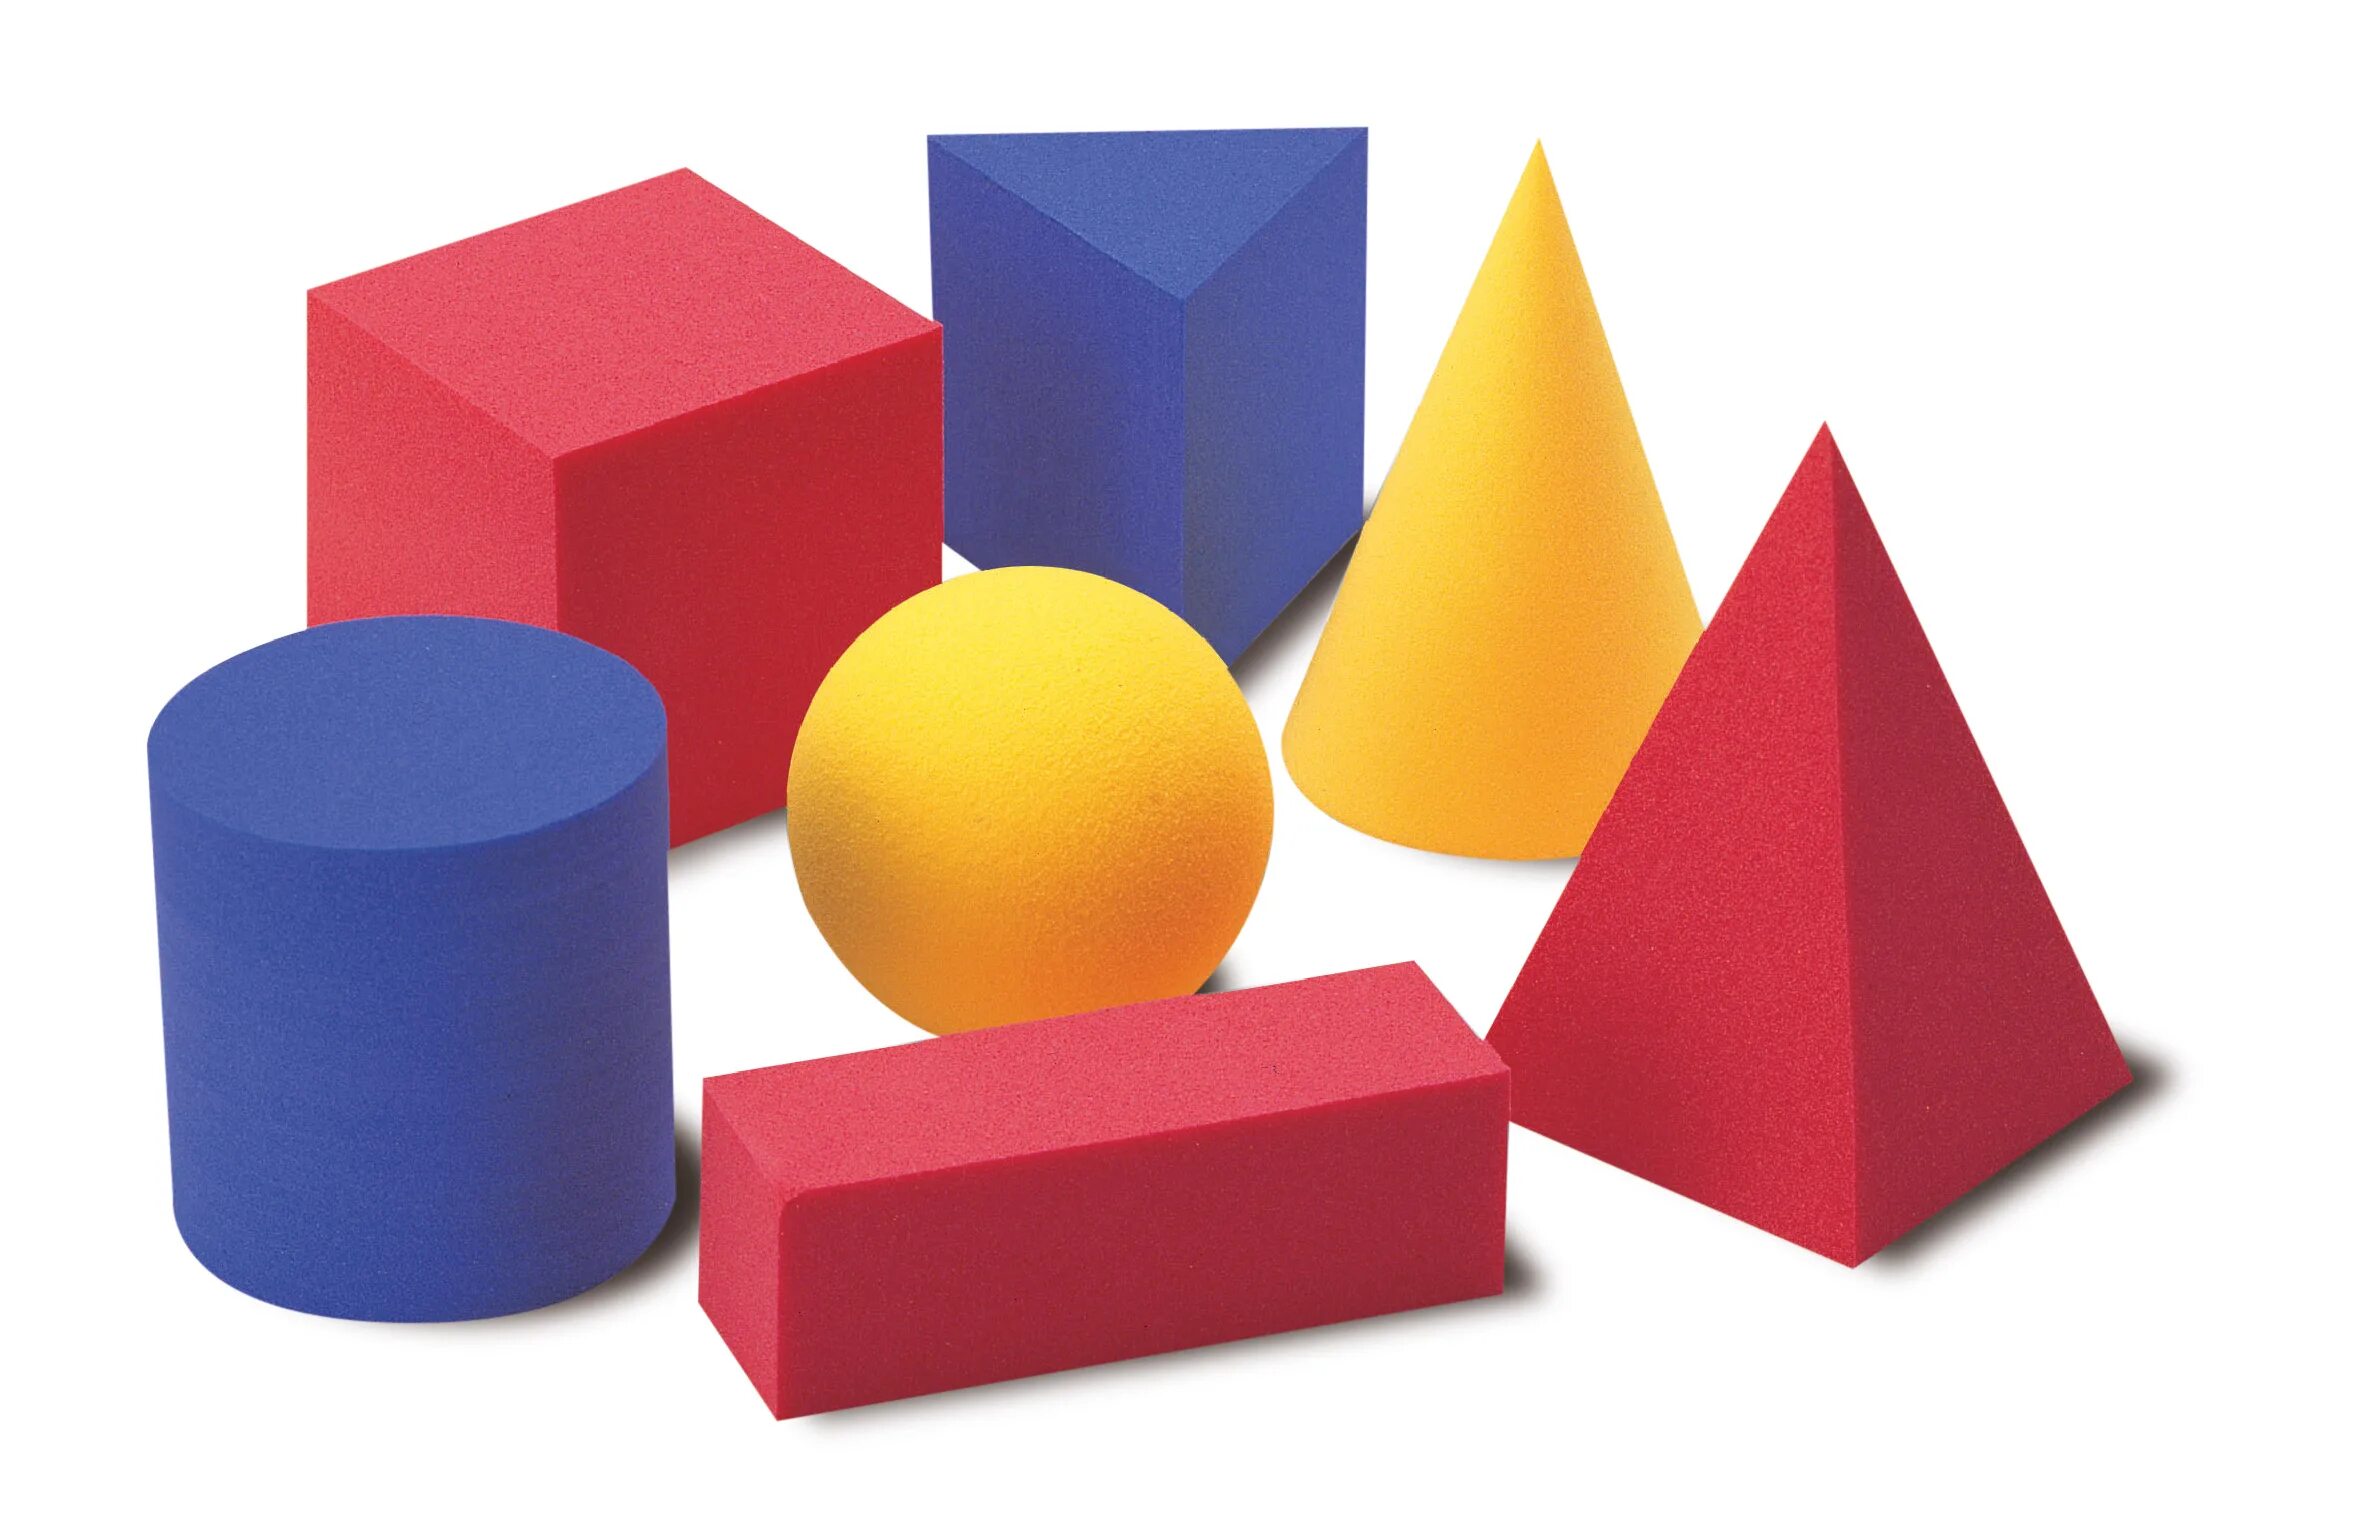 Сфера цилиндр куб конус пирамида. Геометрические фигуры игрушки. Набор геометрических фигур. Объемные геометрические фигуры. Геометрические фигуры для детей.